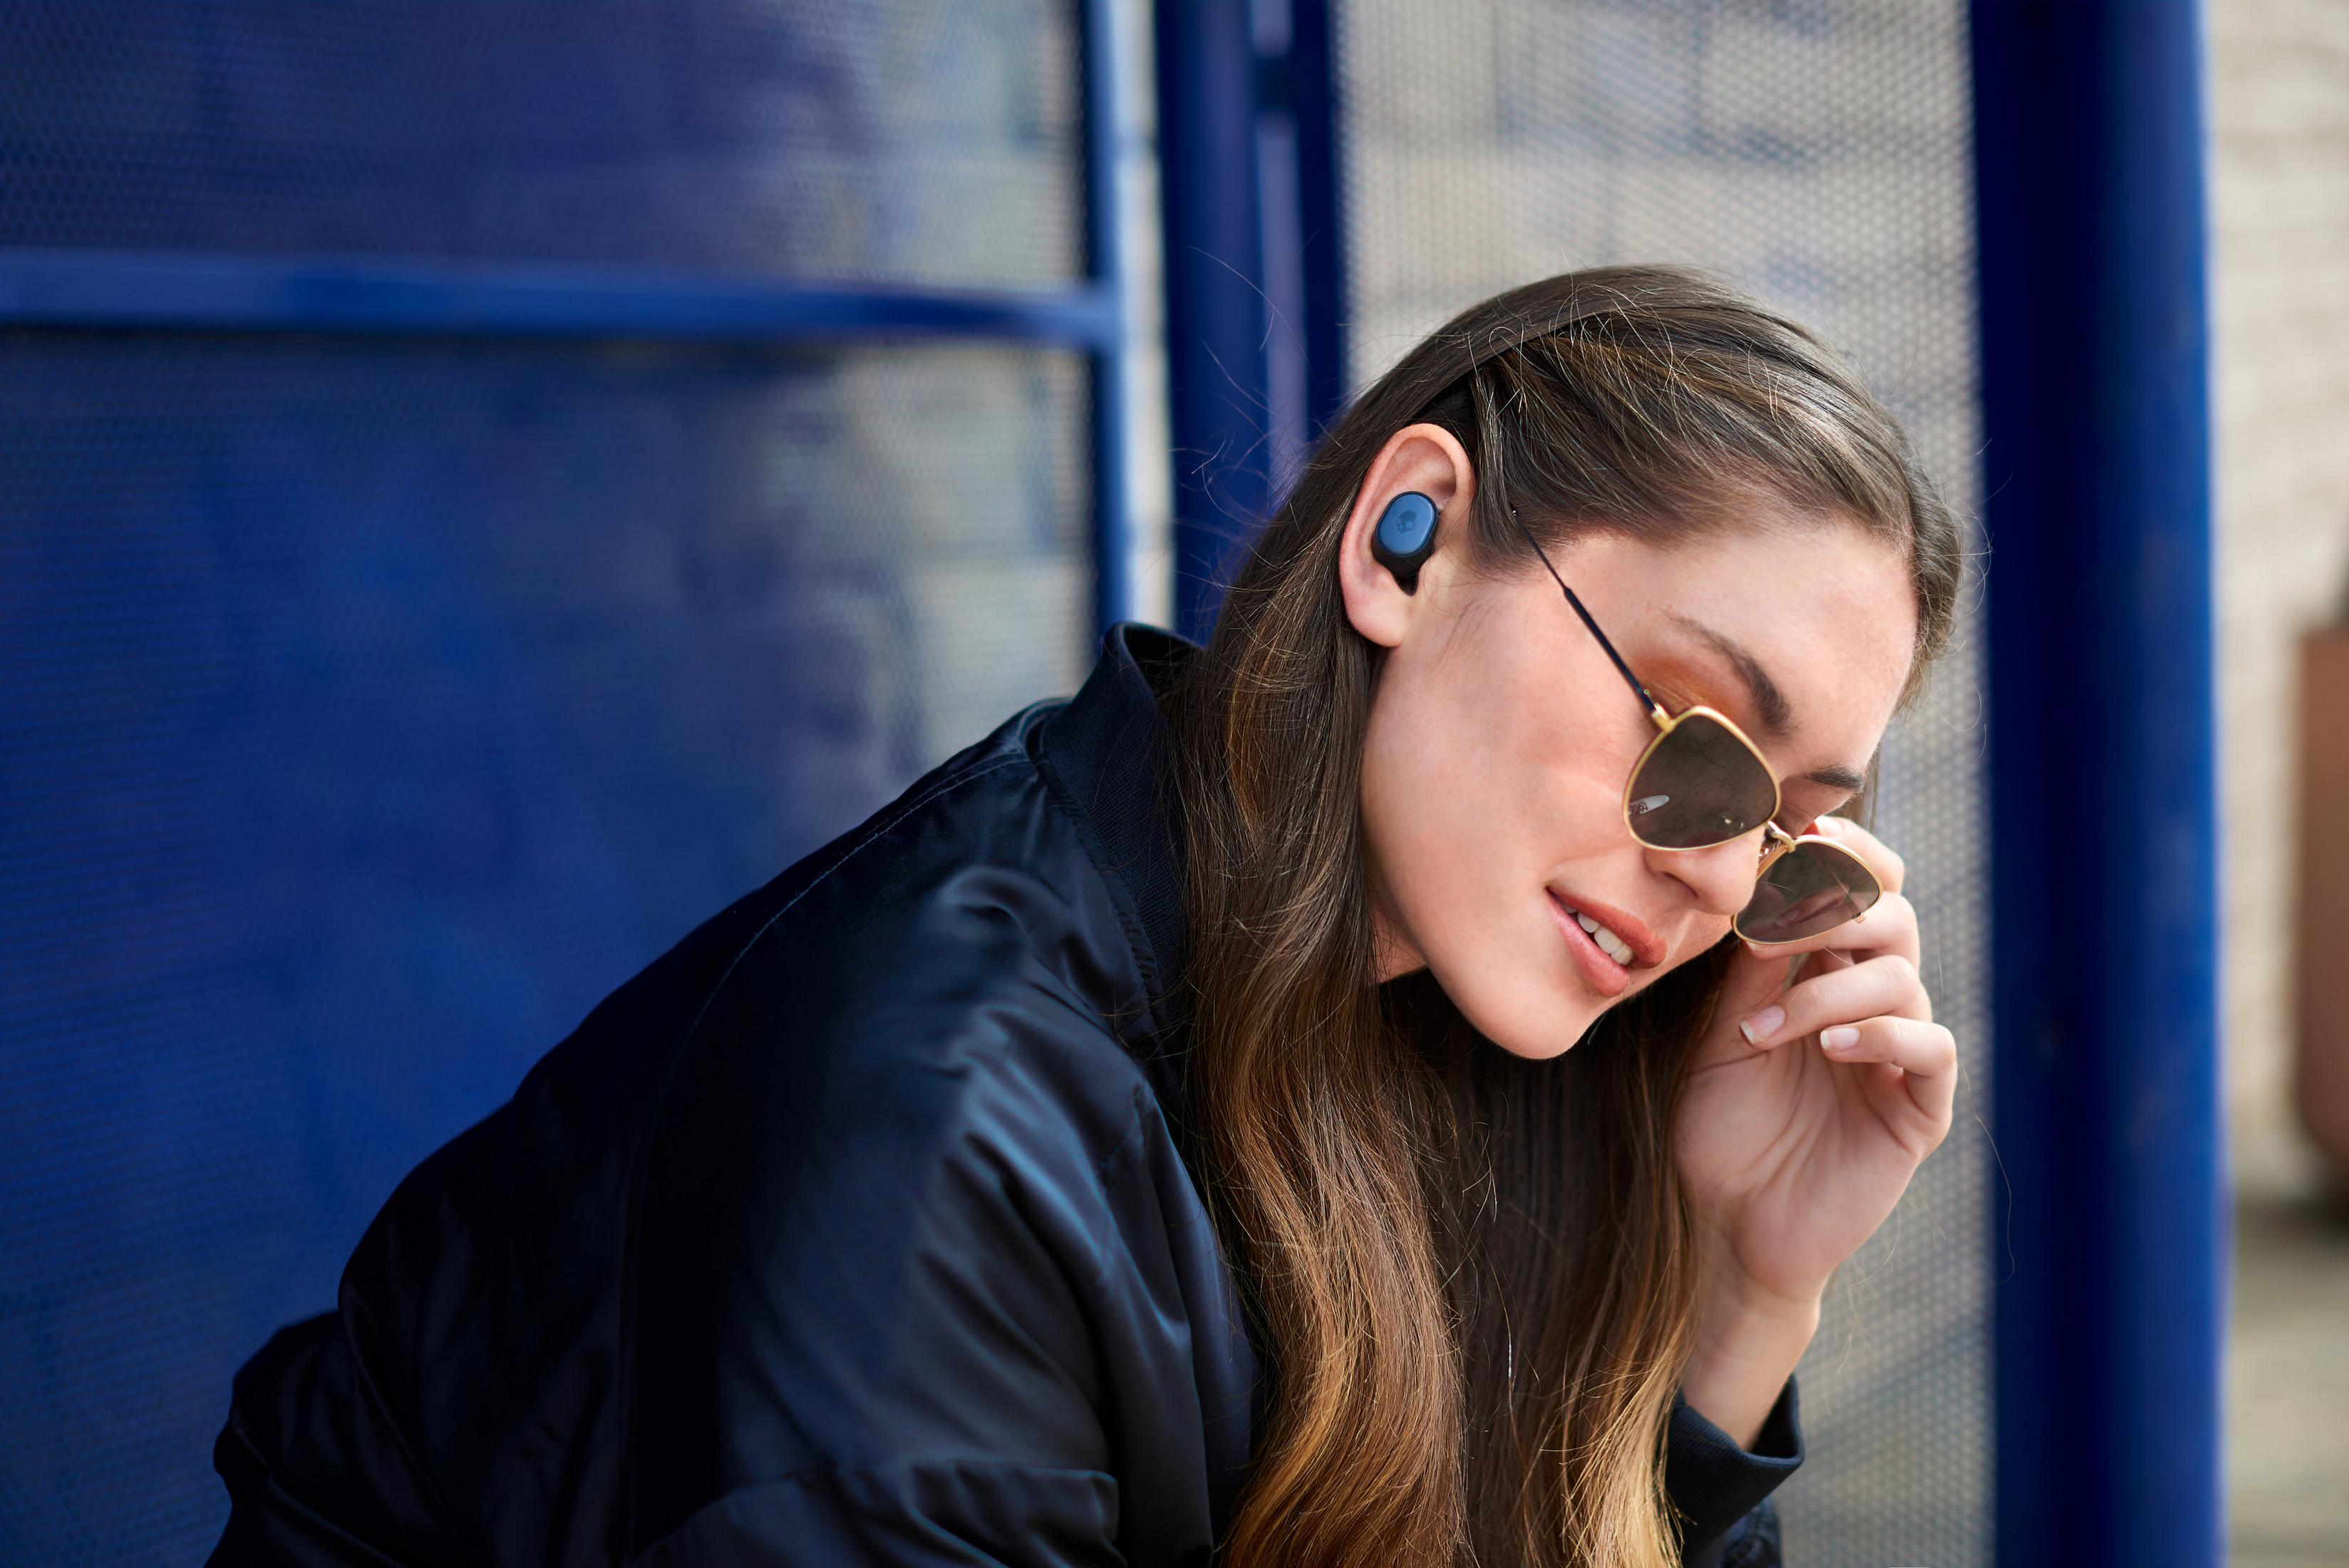 Blau SKULLCANDY In-ear Bluetooth Kopfhörer INDIGO S2TDW-M704 SESH TRUE BLUE, WL